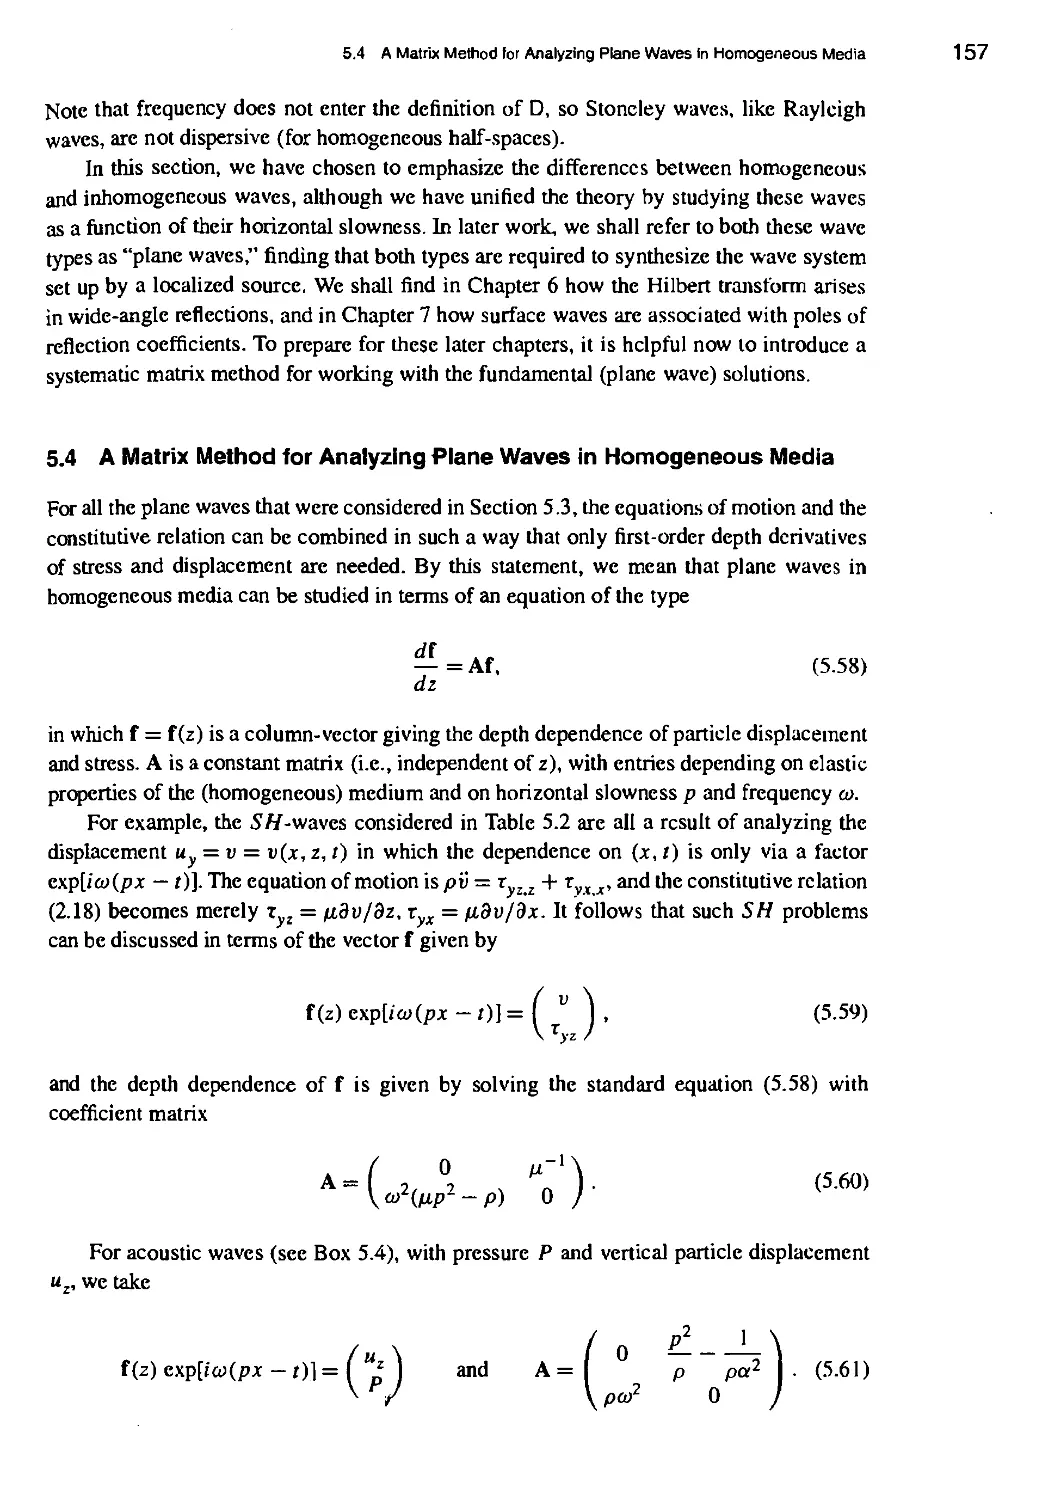 5.4 A Matrix Method for Analyzing Plane Waves in Homogeneous Media